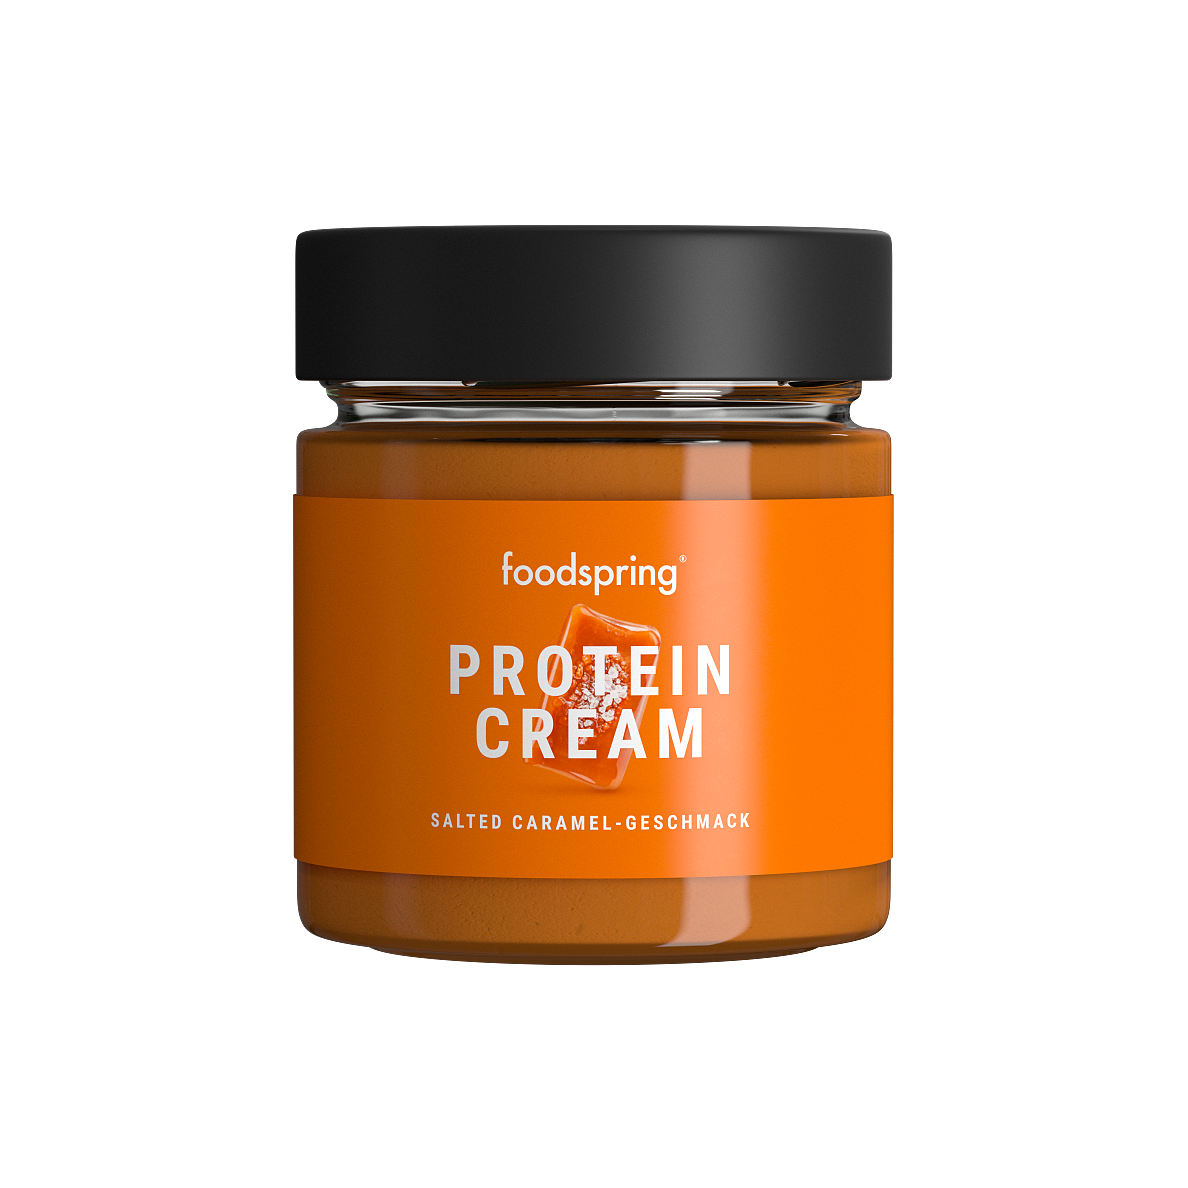 foodspring_Protein Cream_Salted Caramel-Geschmack_EUR 5,99